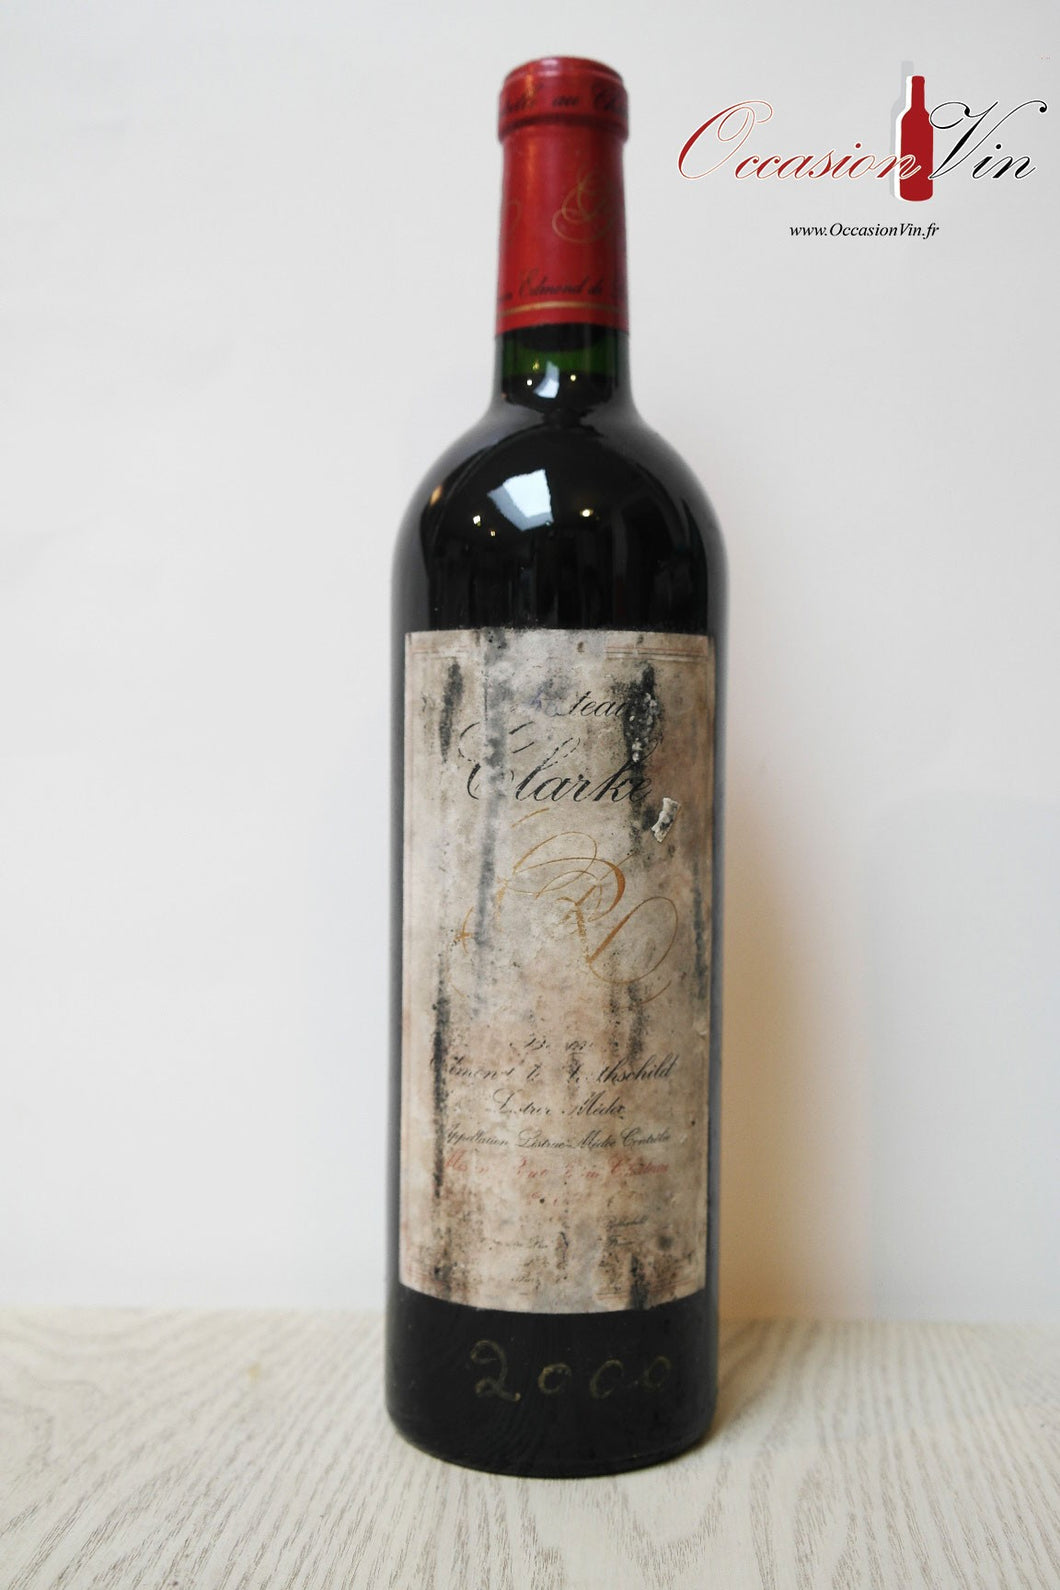 Château Clarke Vin 2000